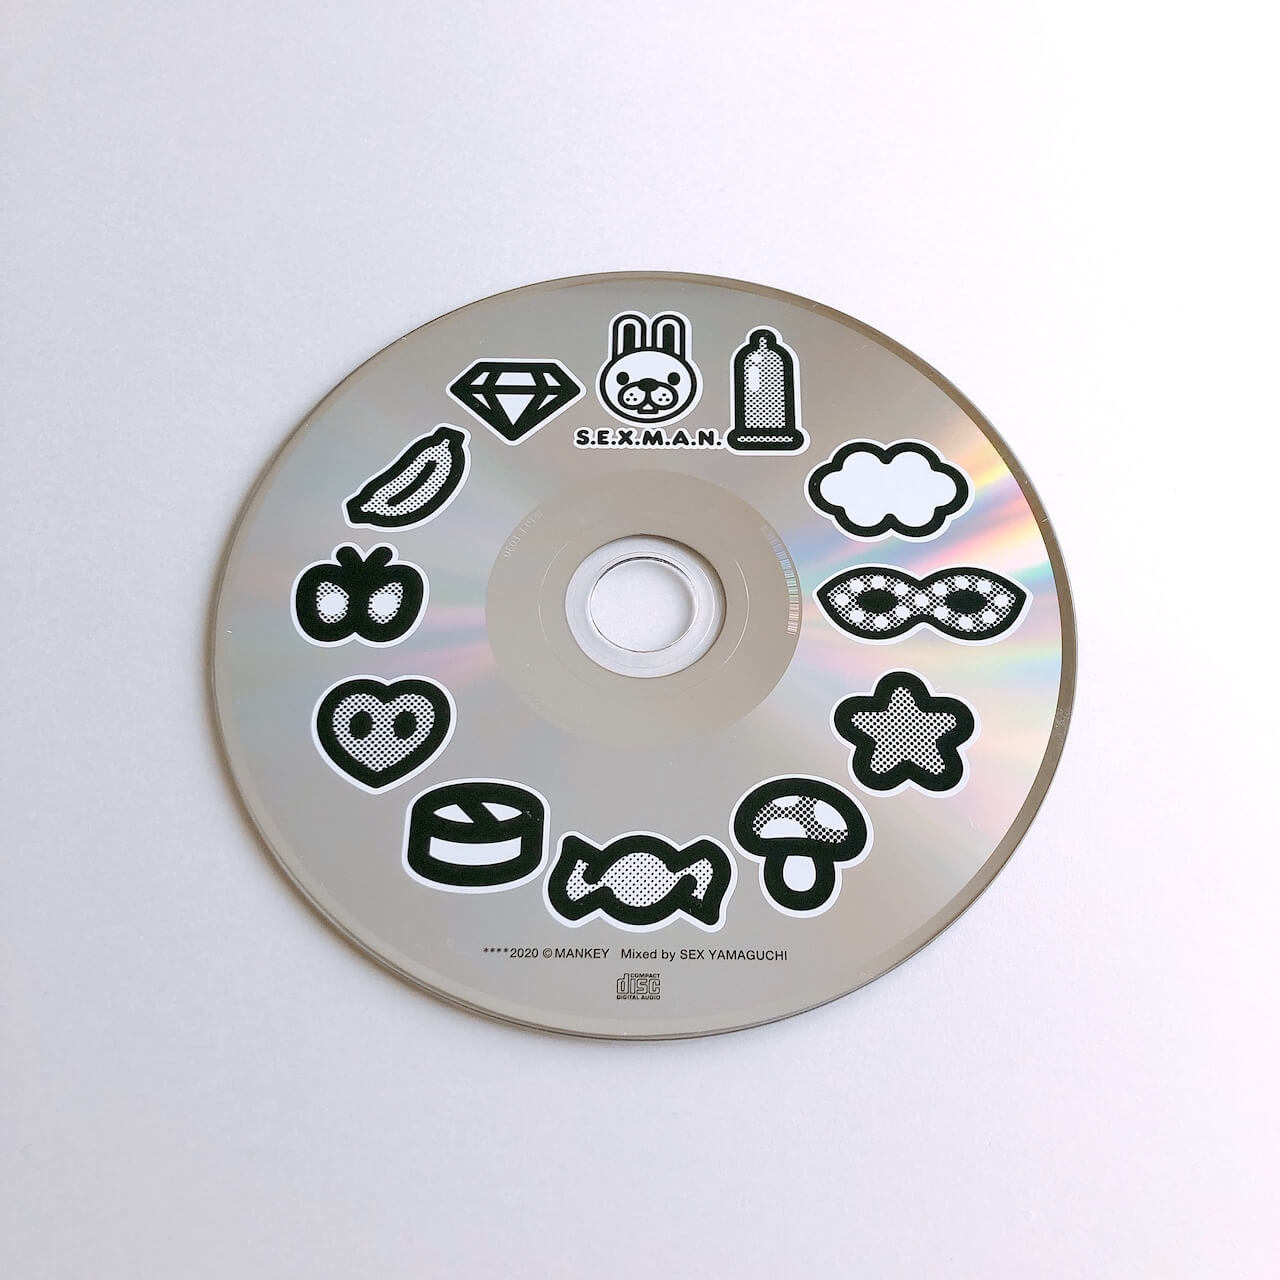 MANKEY＆SEX YamaguchiによるMIX CD『S.E.X.M.A.N.』にキケンなウワサ──『ちんかめ』内藤啓介キュレートの展示＜Let’s get naked＞が開催中 music200703-letsgetnaked-mankey-sexyamaguchi-2-1